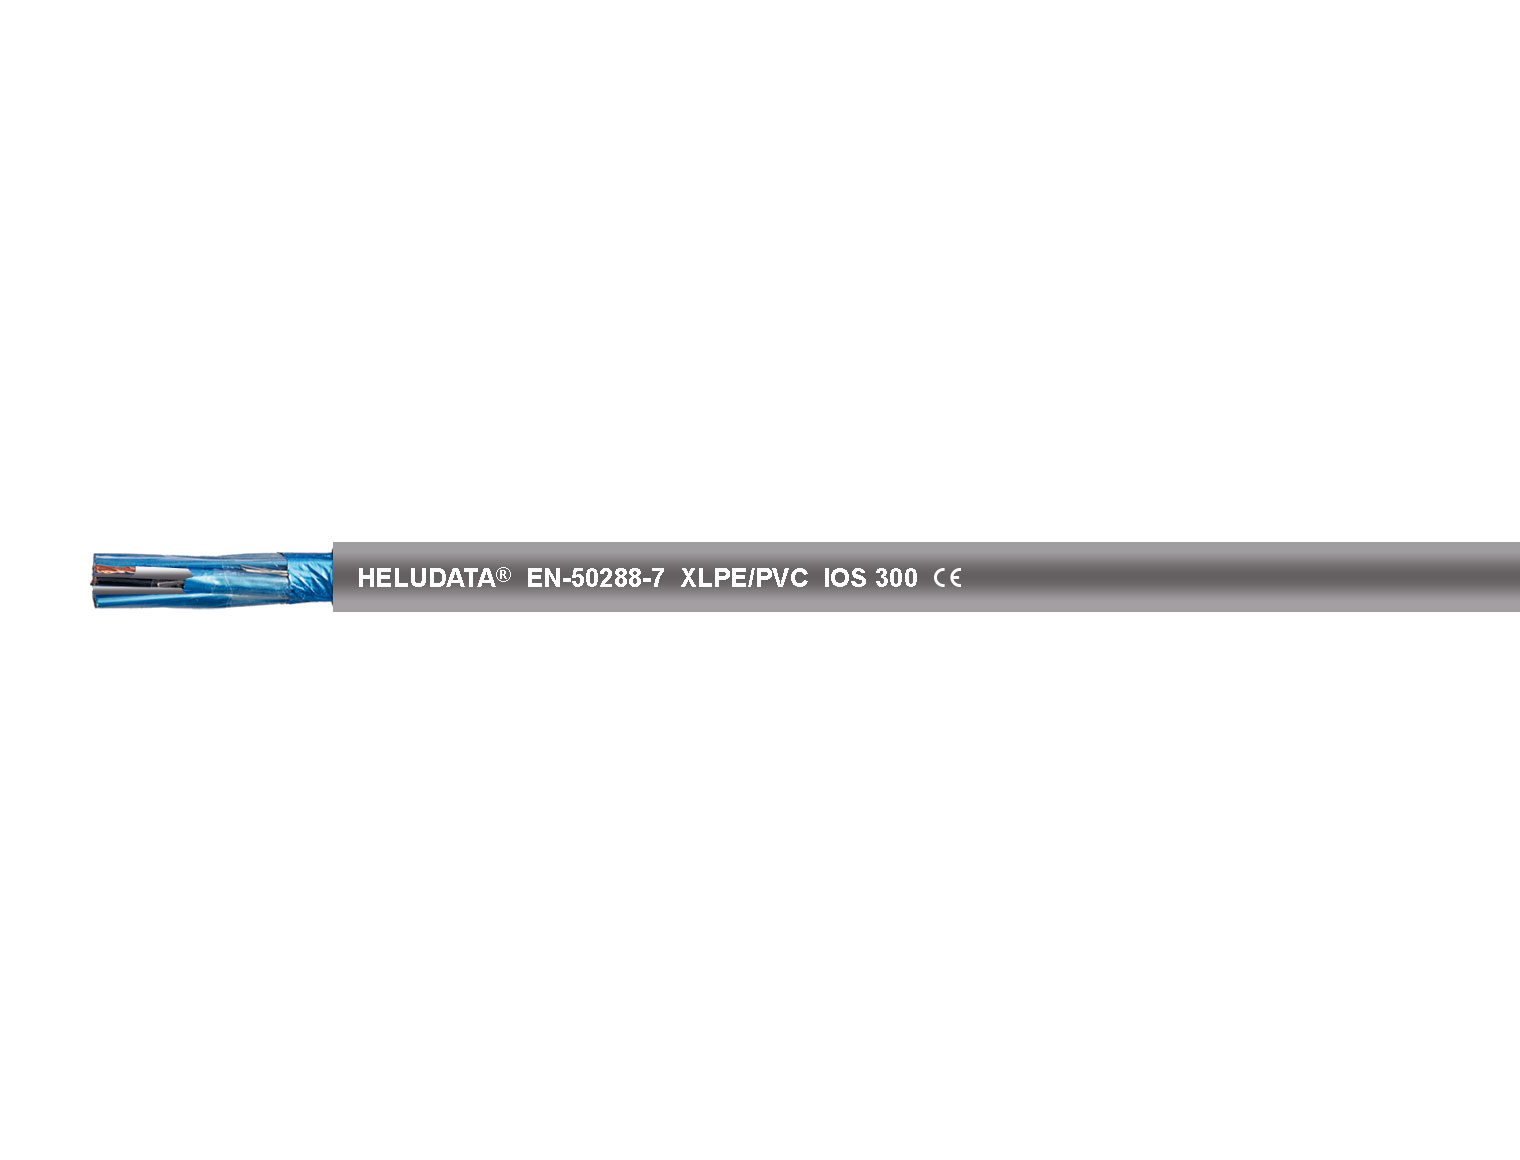 HELUDATA® EN-50288-7 XLPE/PVC IOS 300